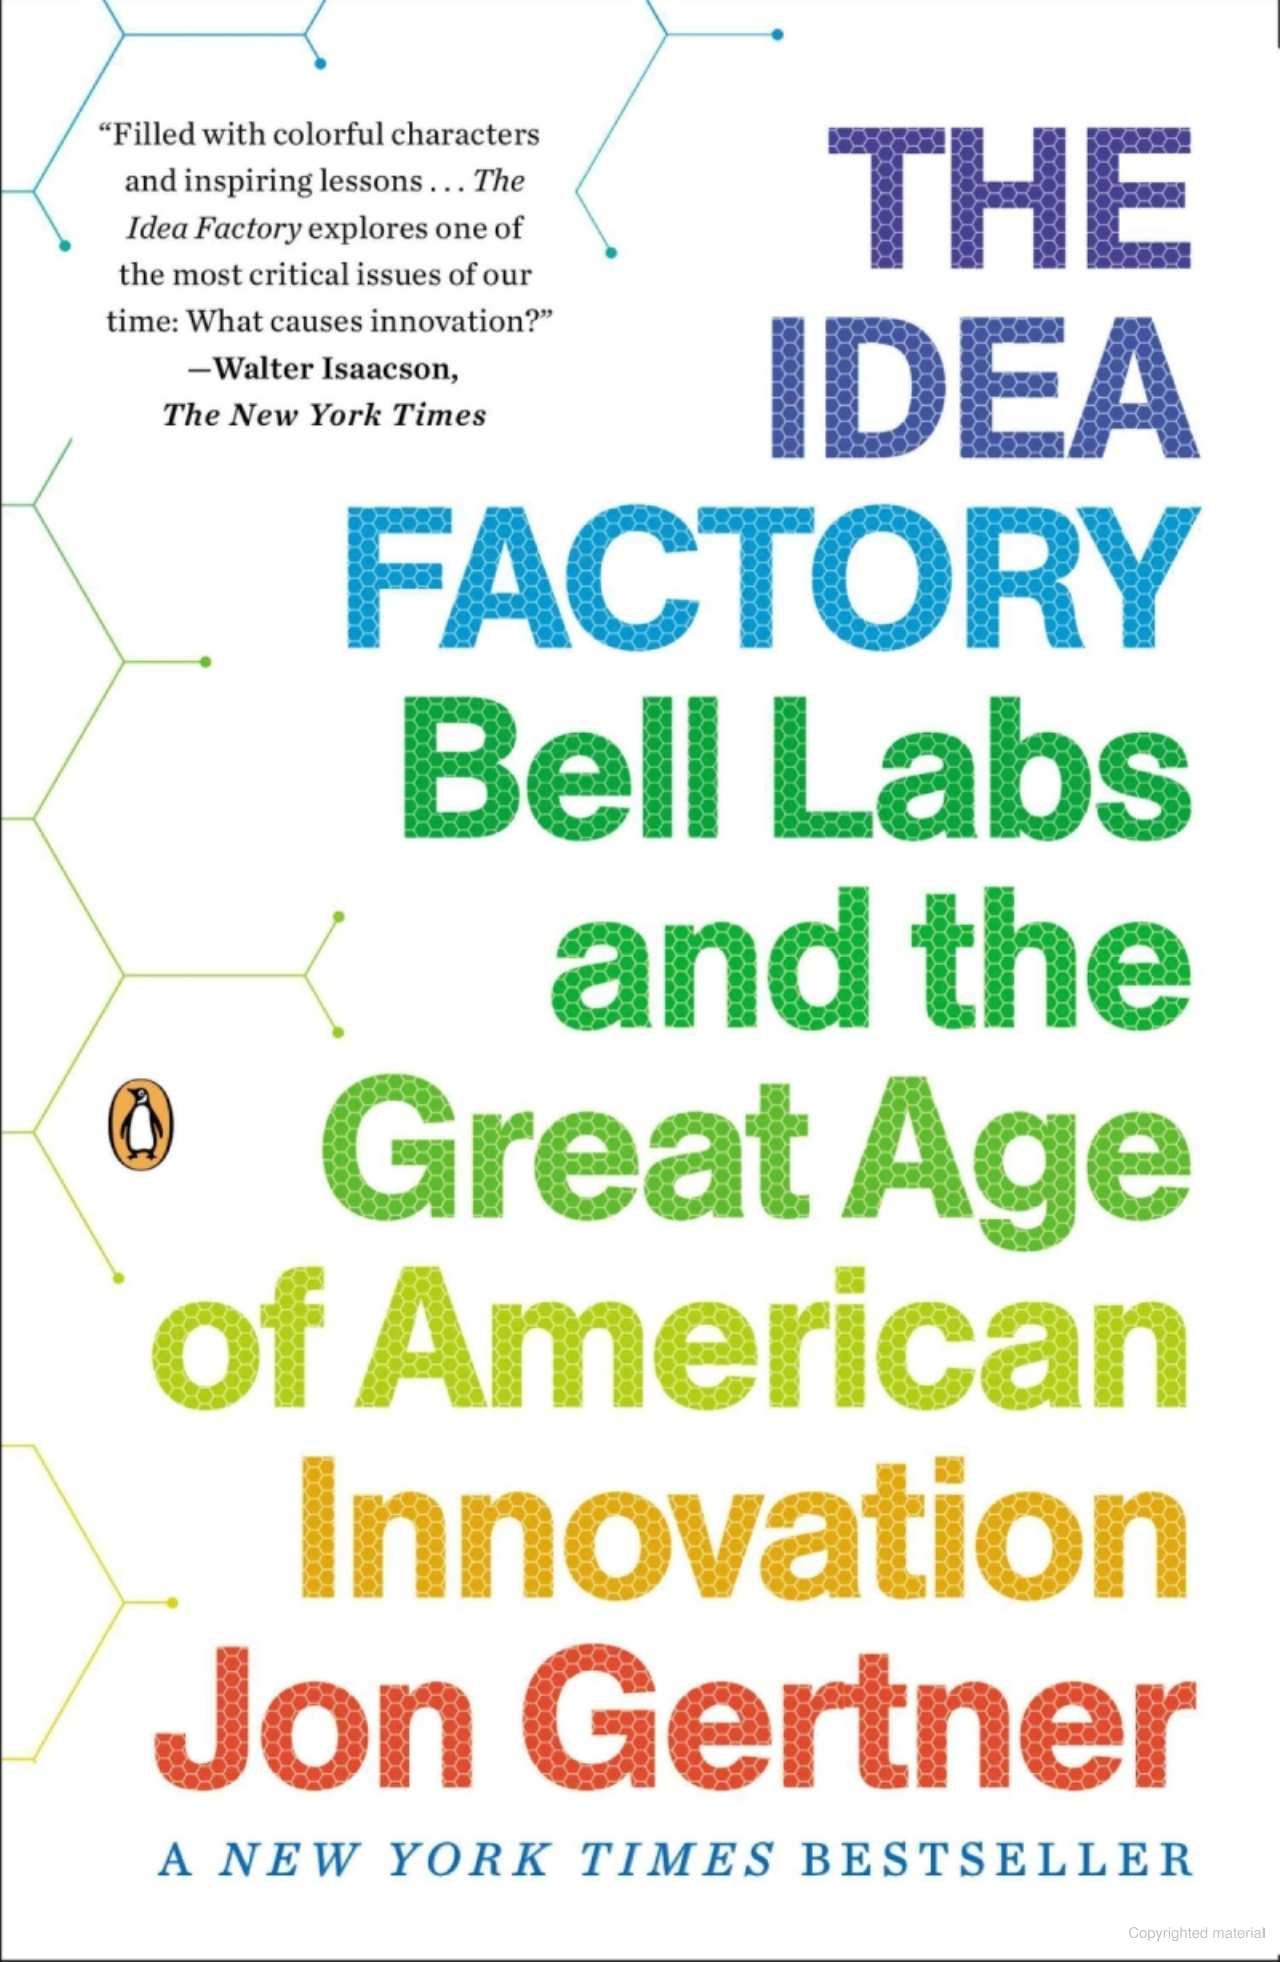 The idea factory (2012, Penguin Press)